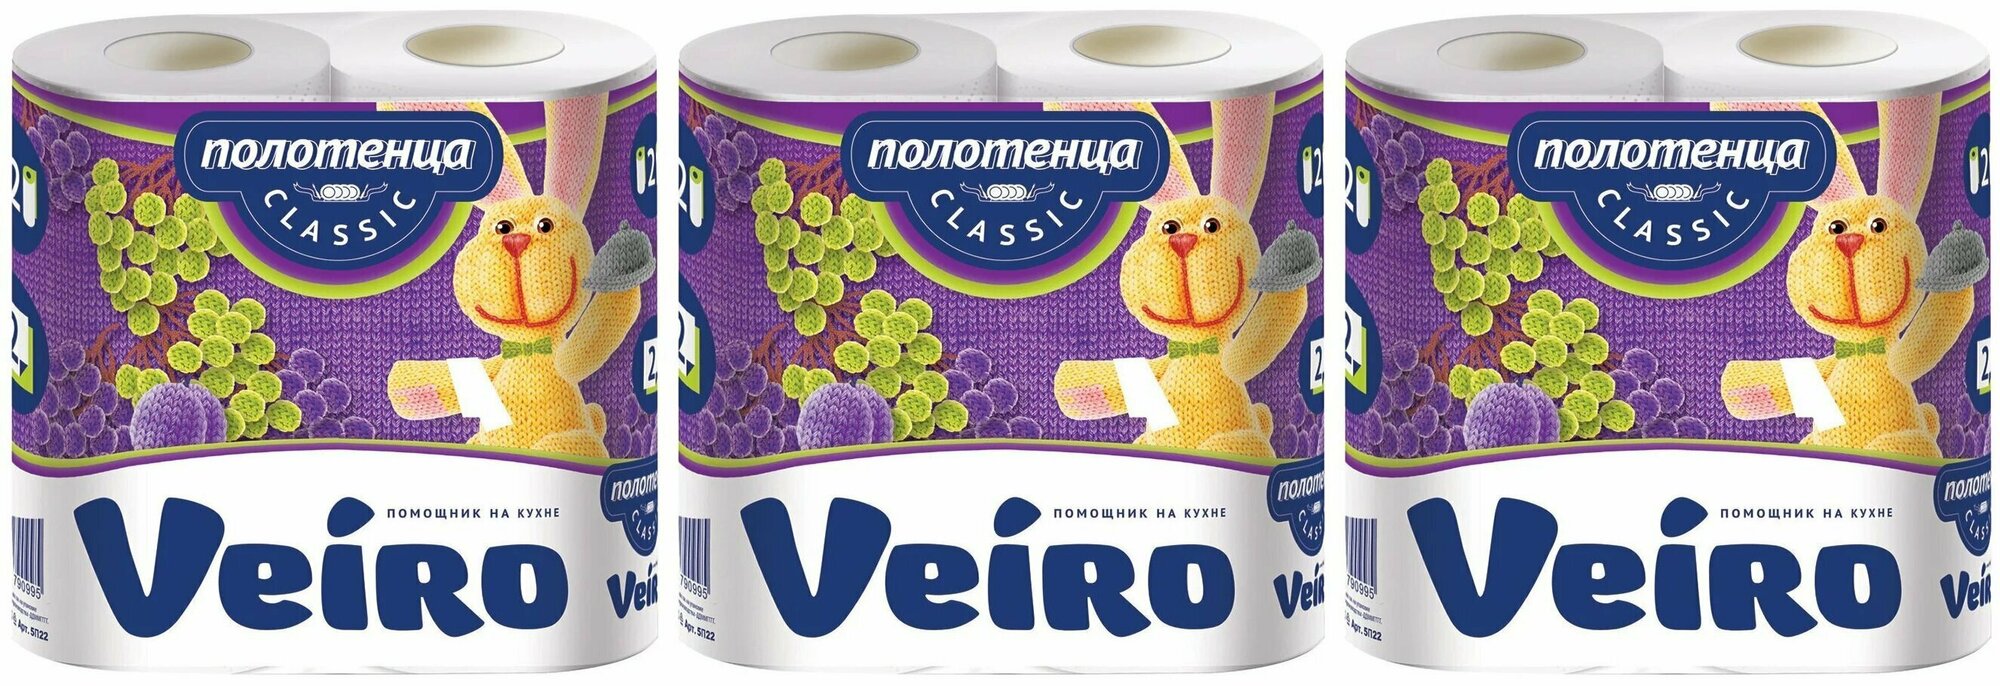 Бумажные полотенца "Veiro", 2 сл, 2 рул. x 3 уп.